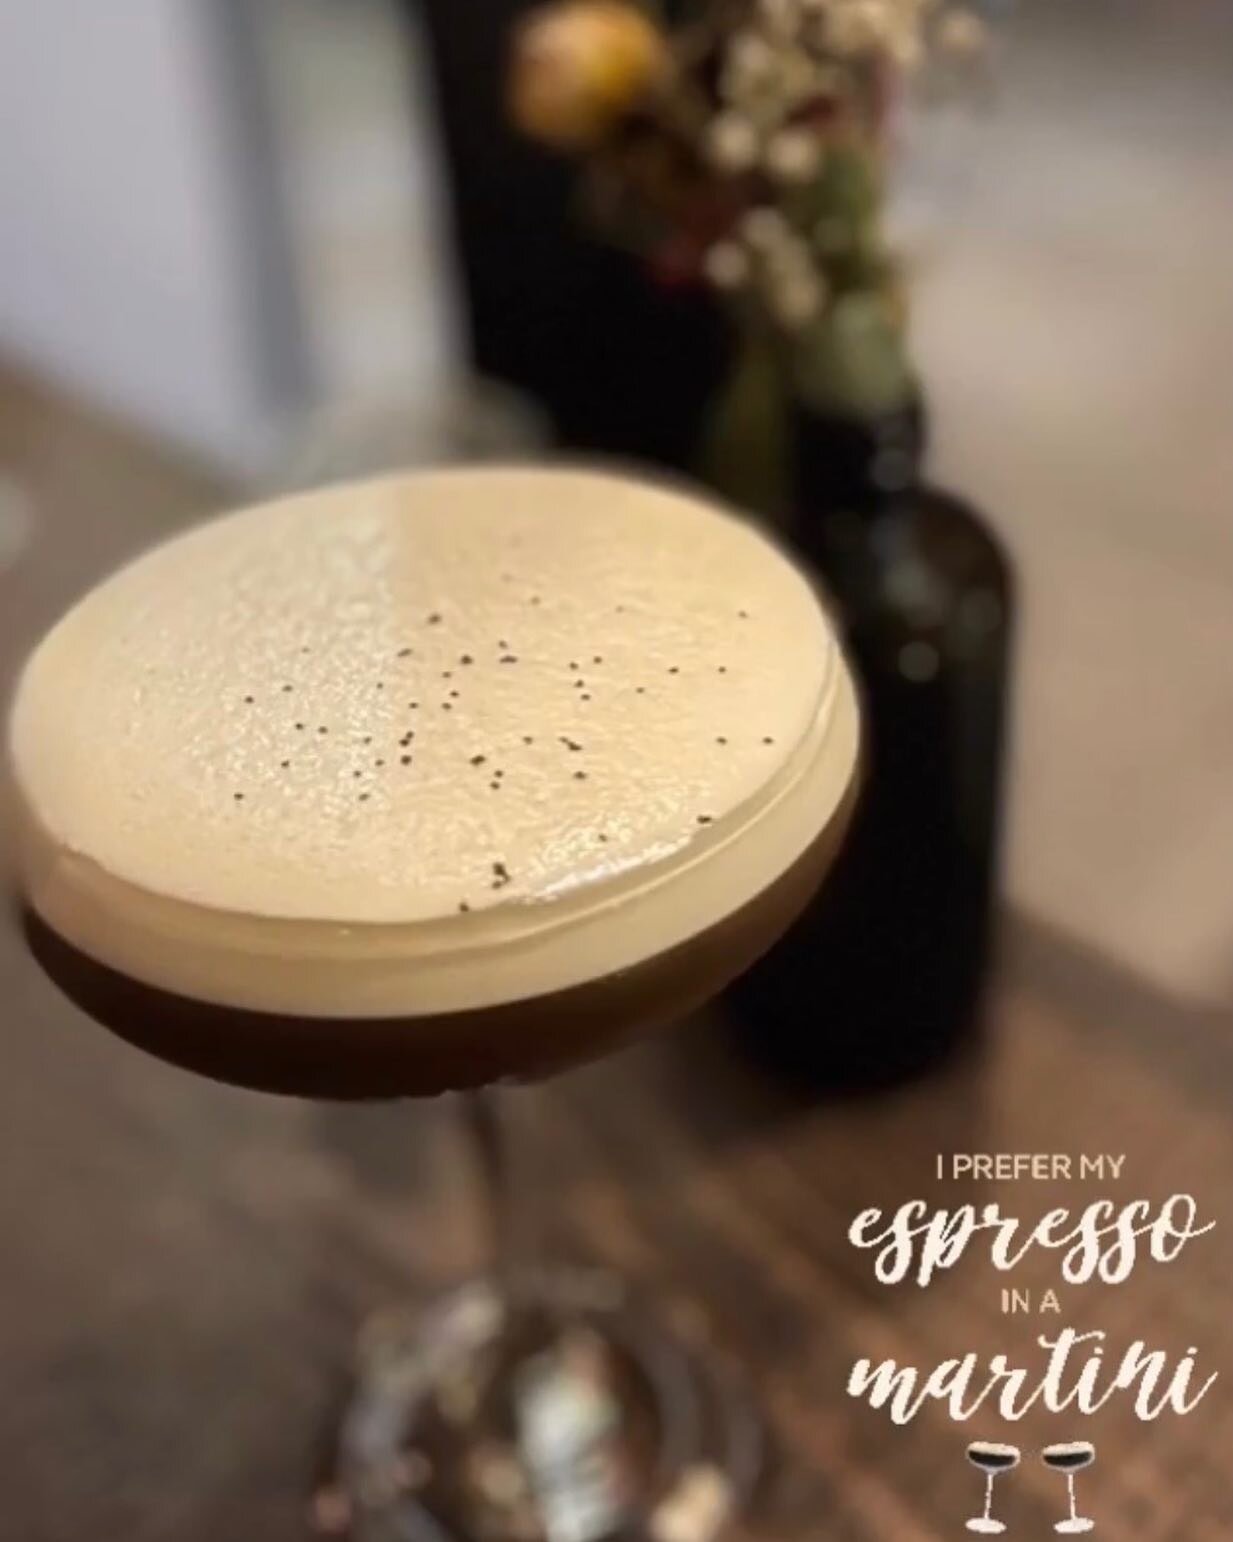 On Fridays, (and everyday) we prefer our Espresso in a Martini. 

#espressomartini #chelseanyc #flatironnyc #westvillagenyc #wildwestvillage #nyccocktailbar #nycbars #imbibegram #liqpic #wakemeupandfuckmeup